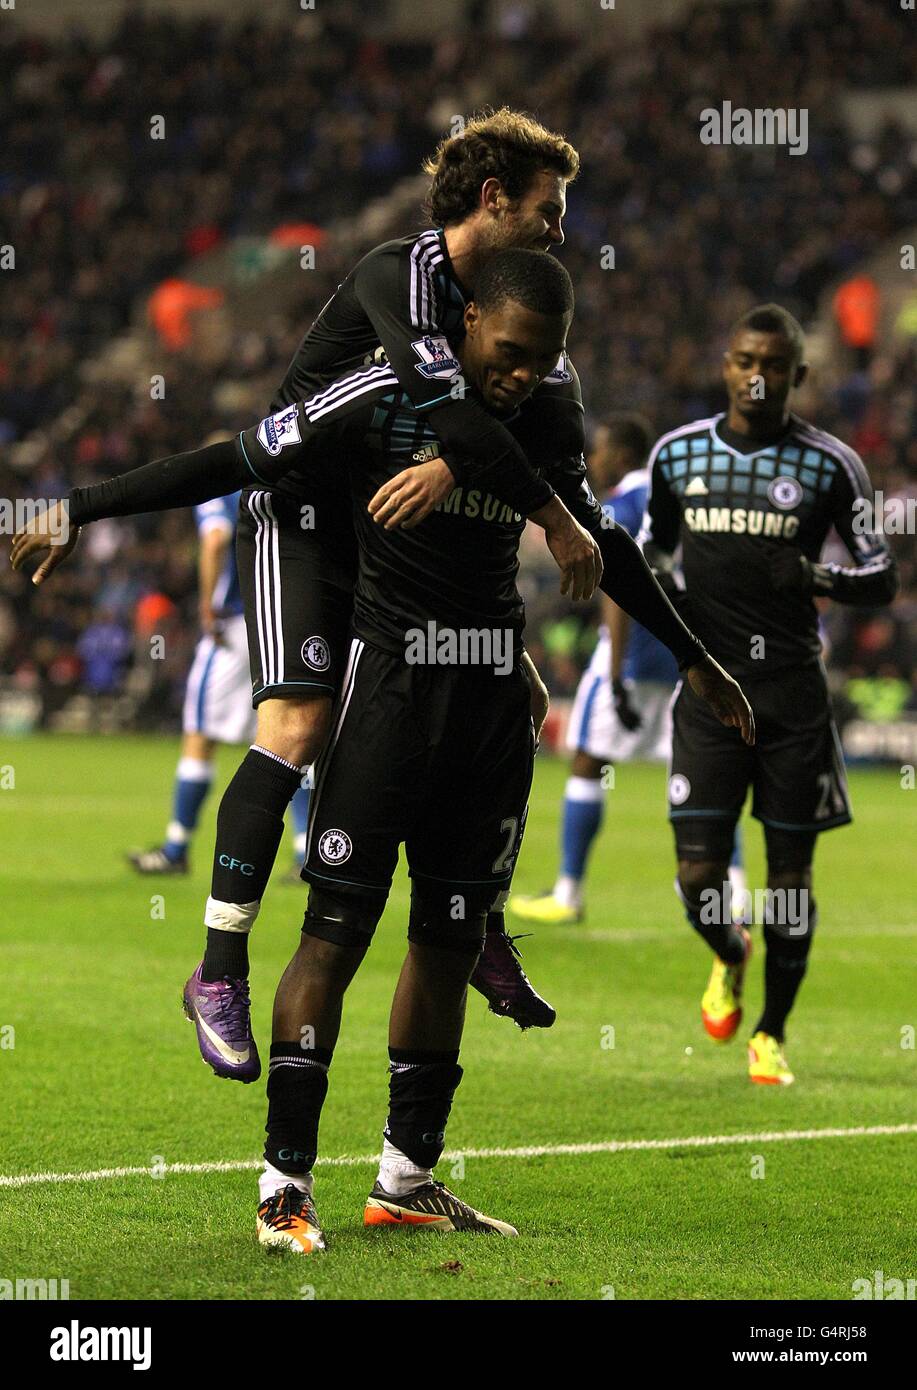 Chelsea's Daniel Sturridge (front) celebrates with his team-mate Juan Mata after scoring his team's opening goal Stock Photo